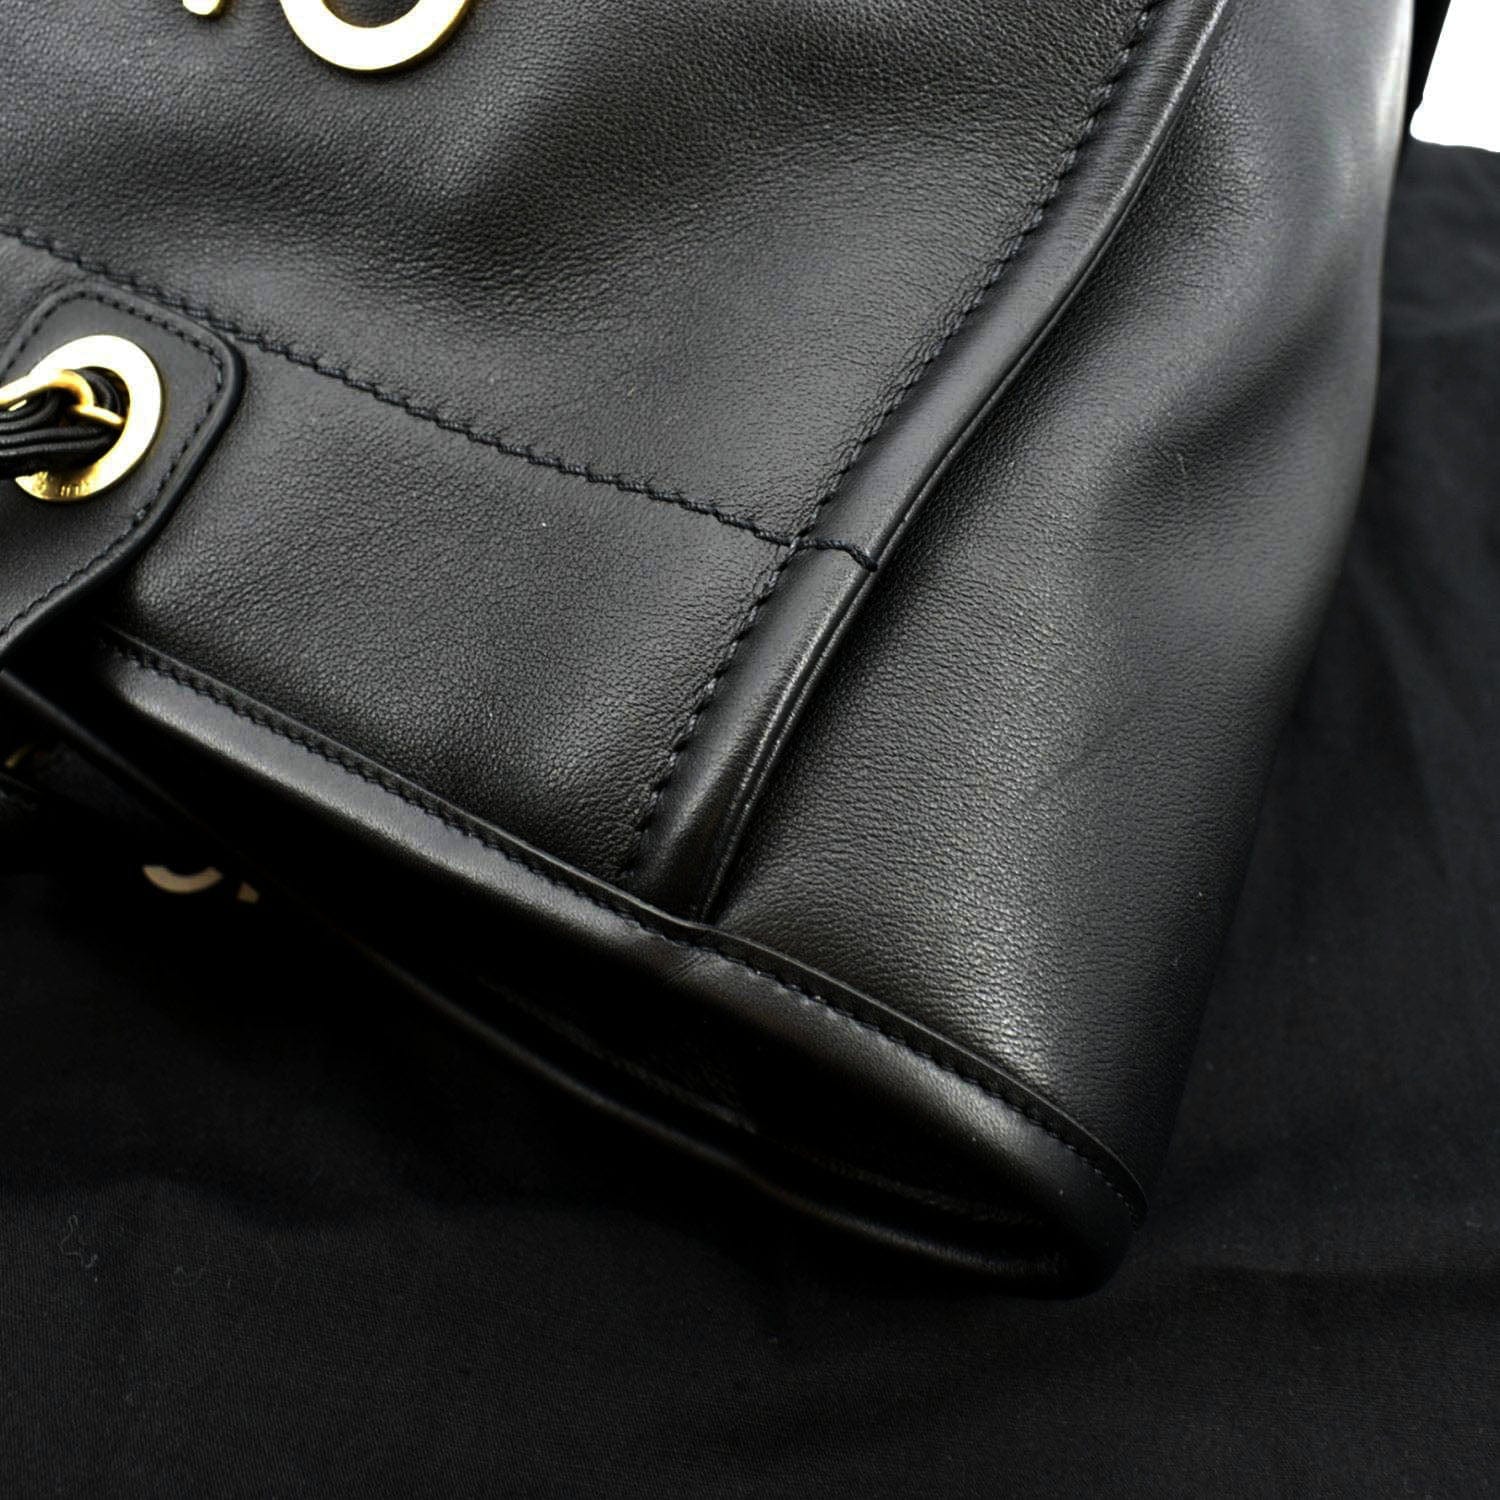 Chanel Deauville Medium Calfskin Leather Tote Bag Black